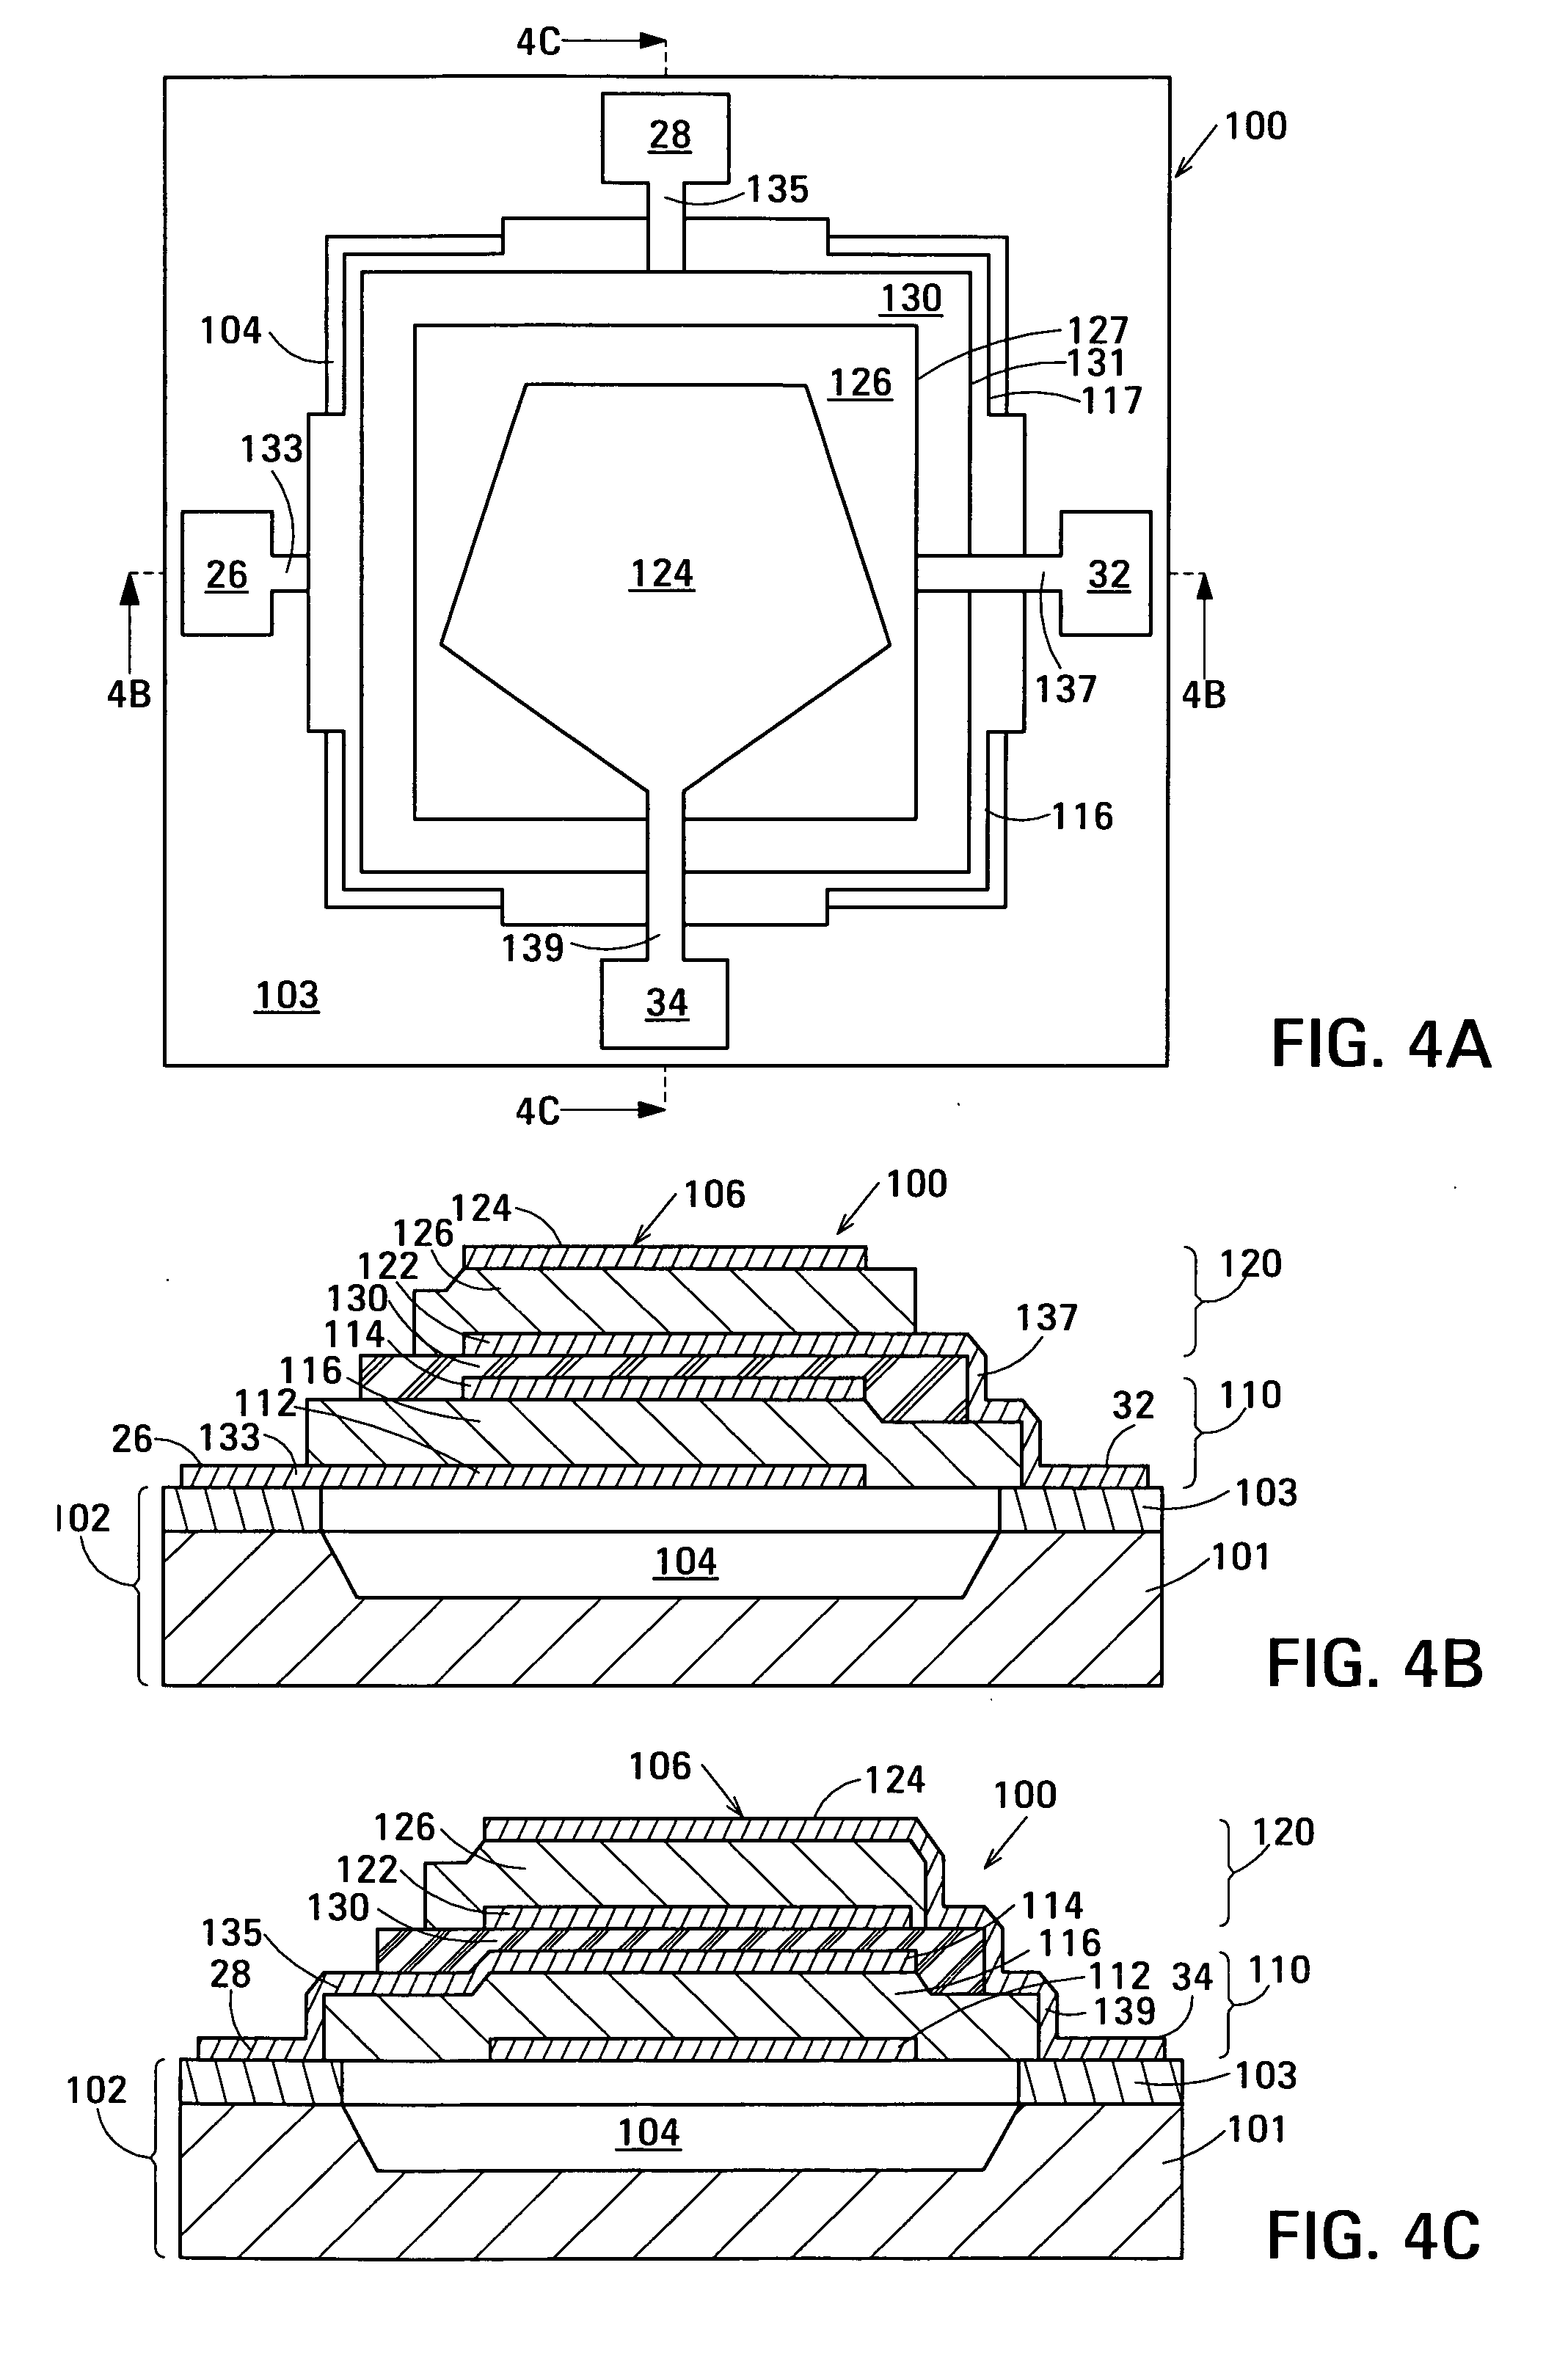 Acoustic galvanic isolator